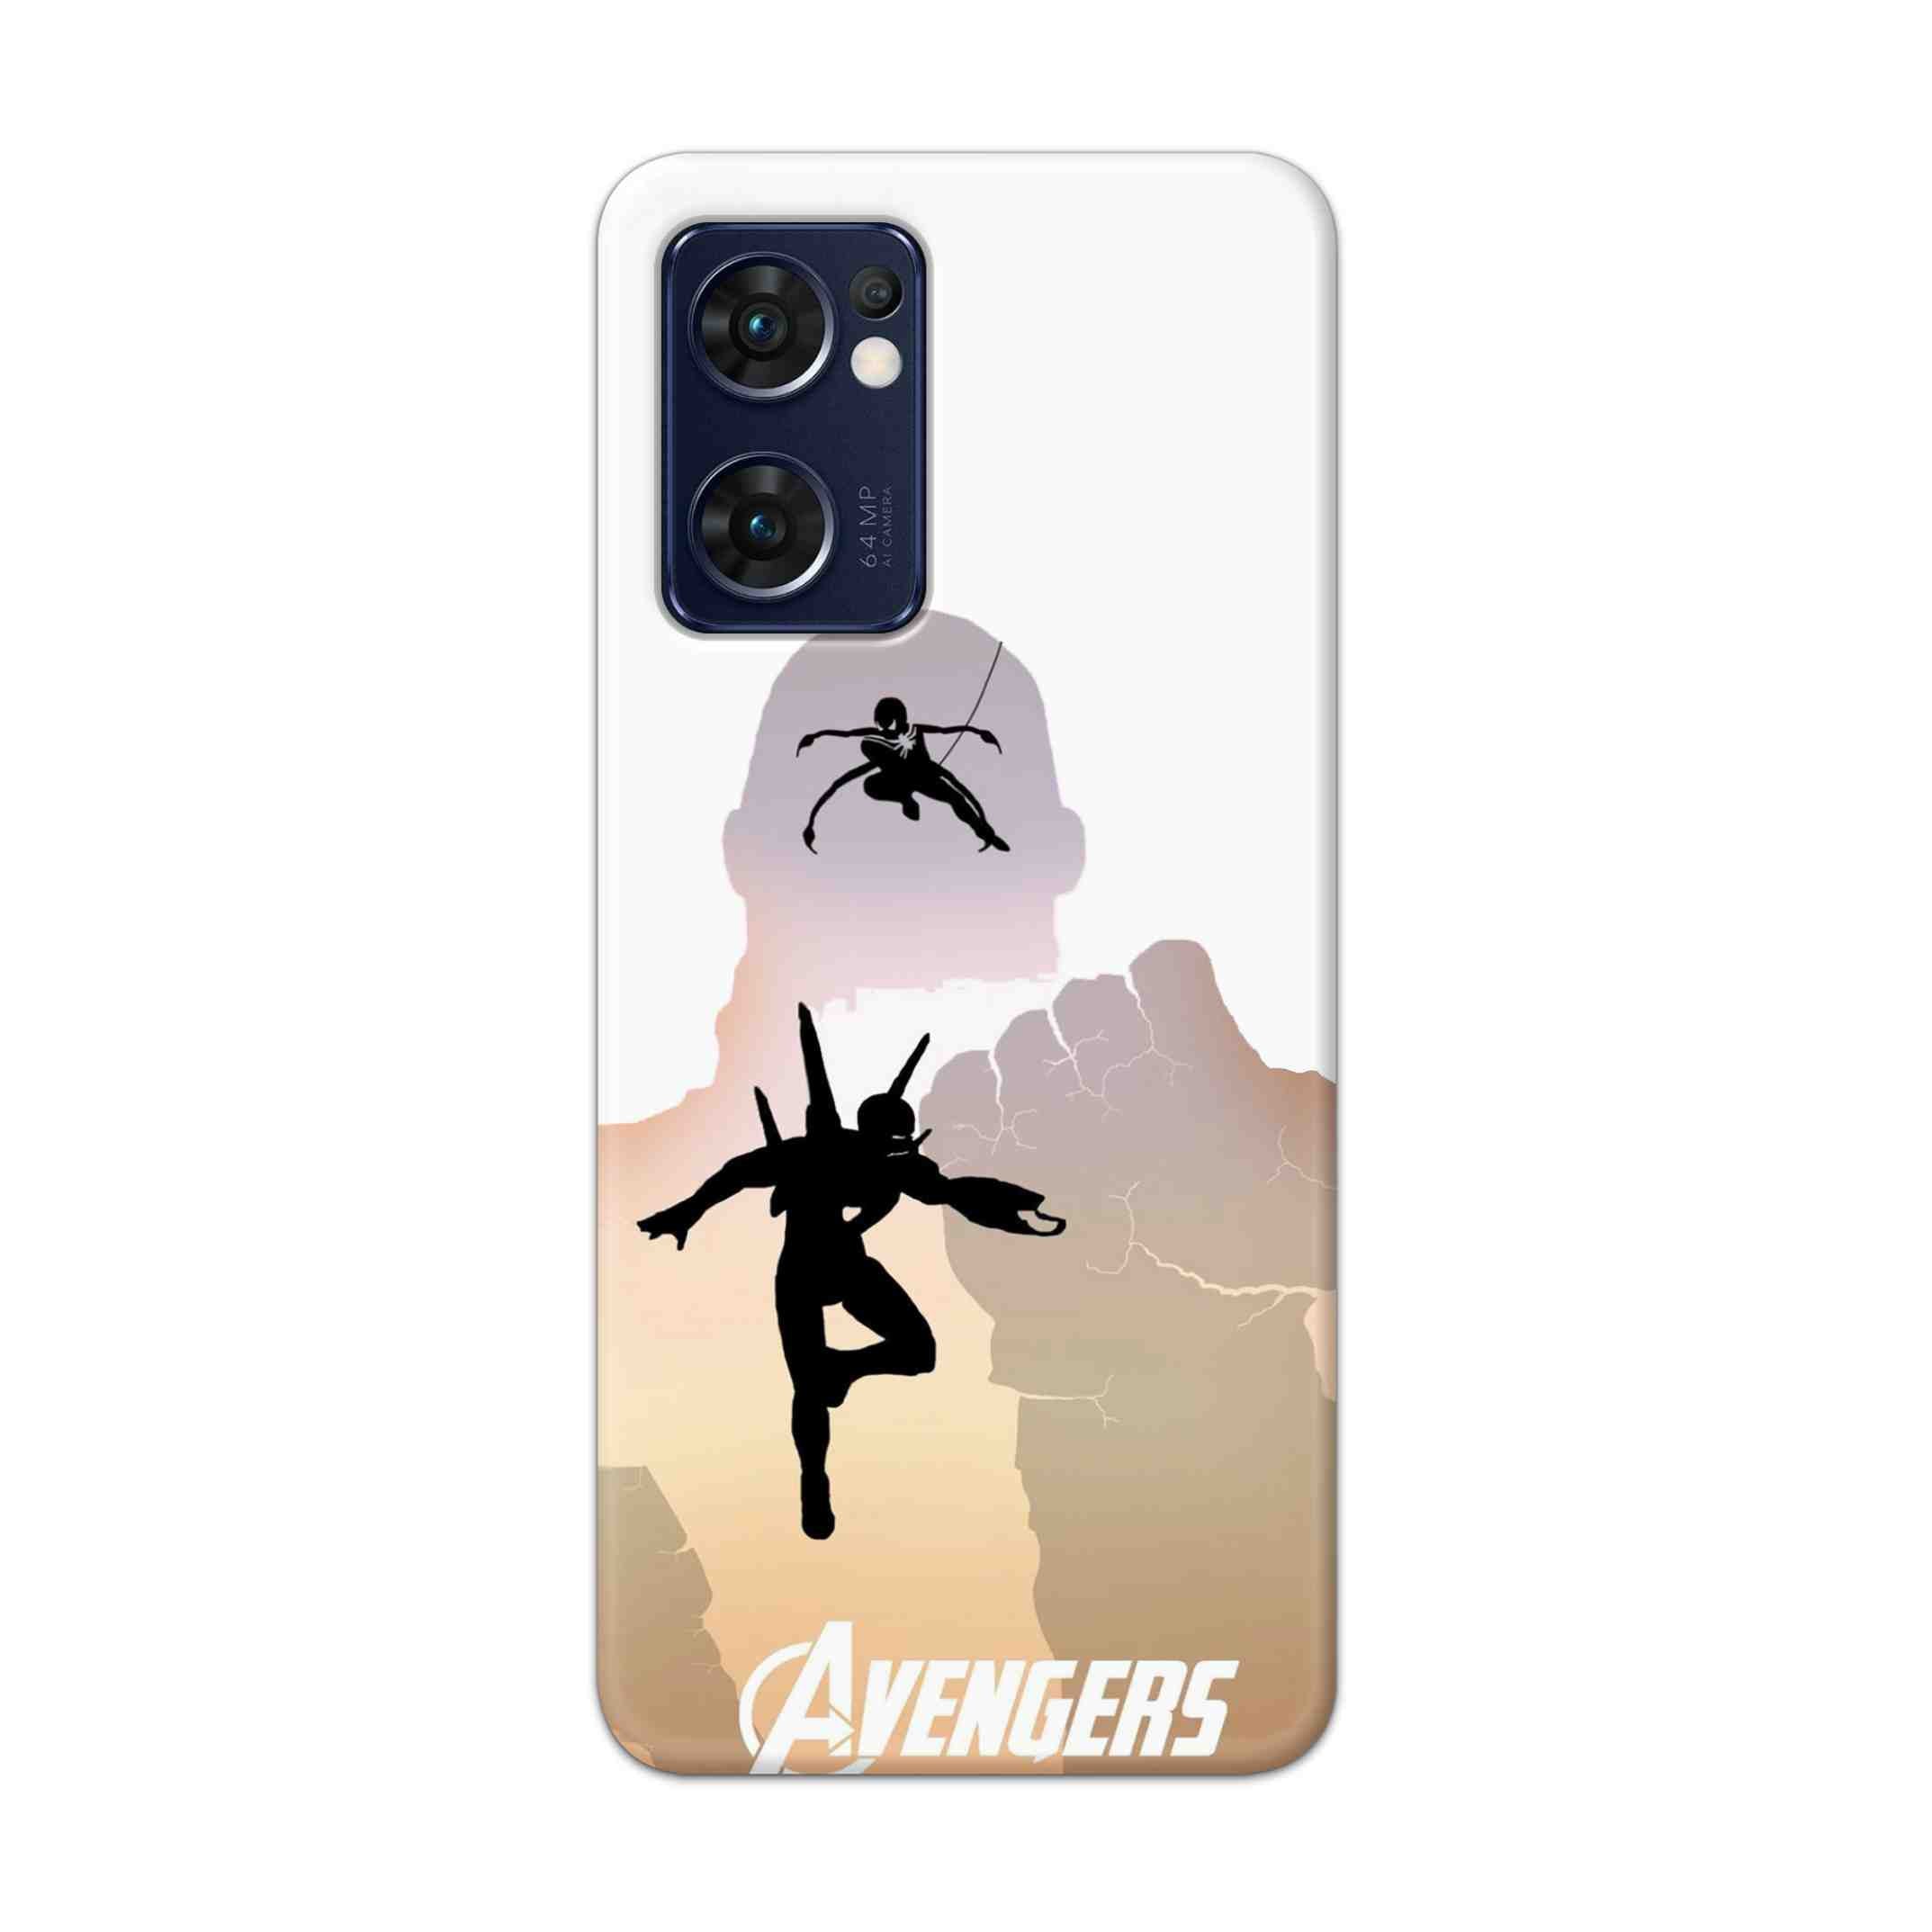 Buy Iron Man Vs Spiderman Hard Back Mobile Phone Case Cover For Reno 7 5G Online